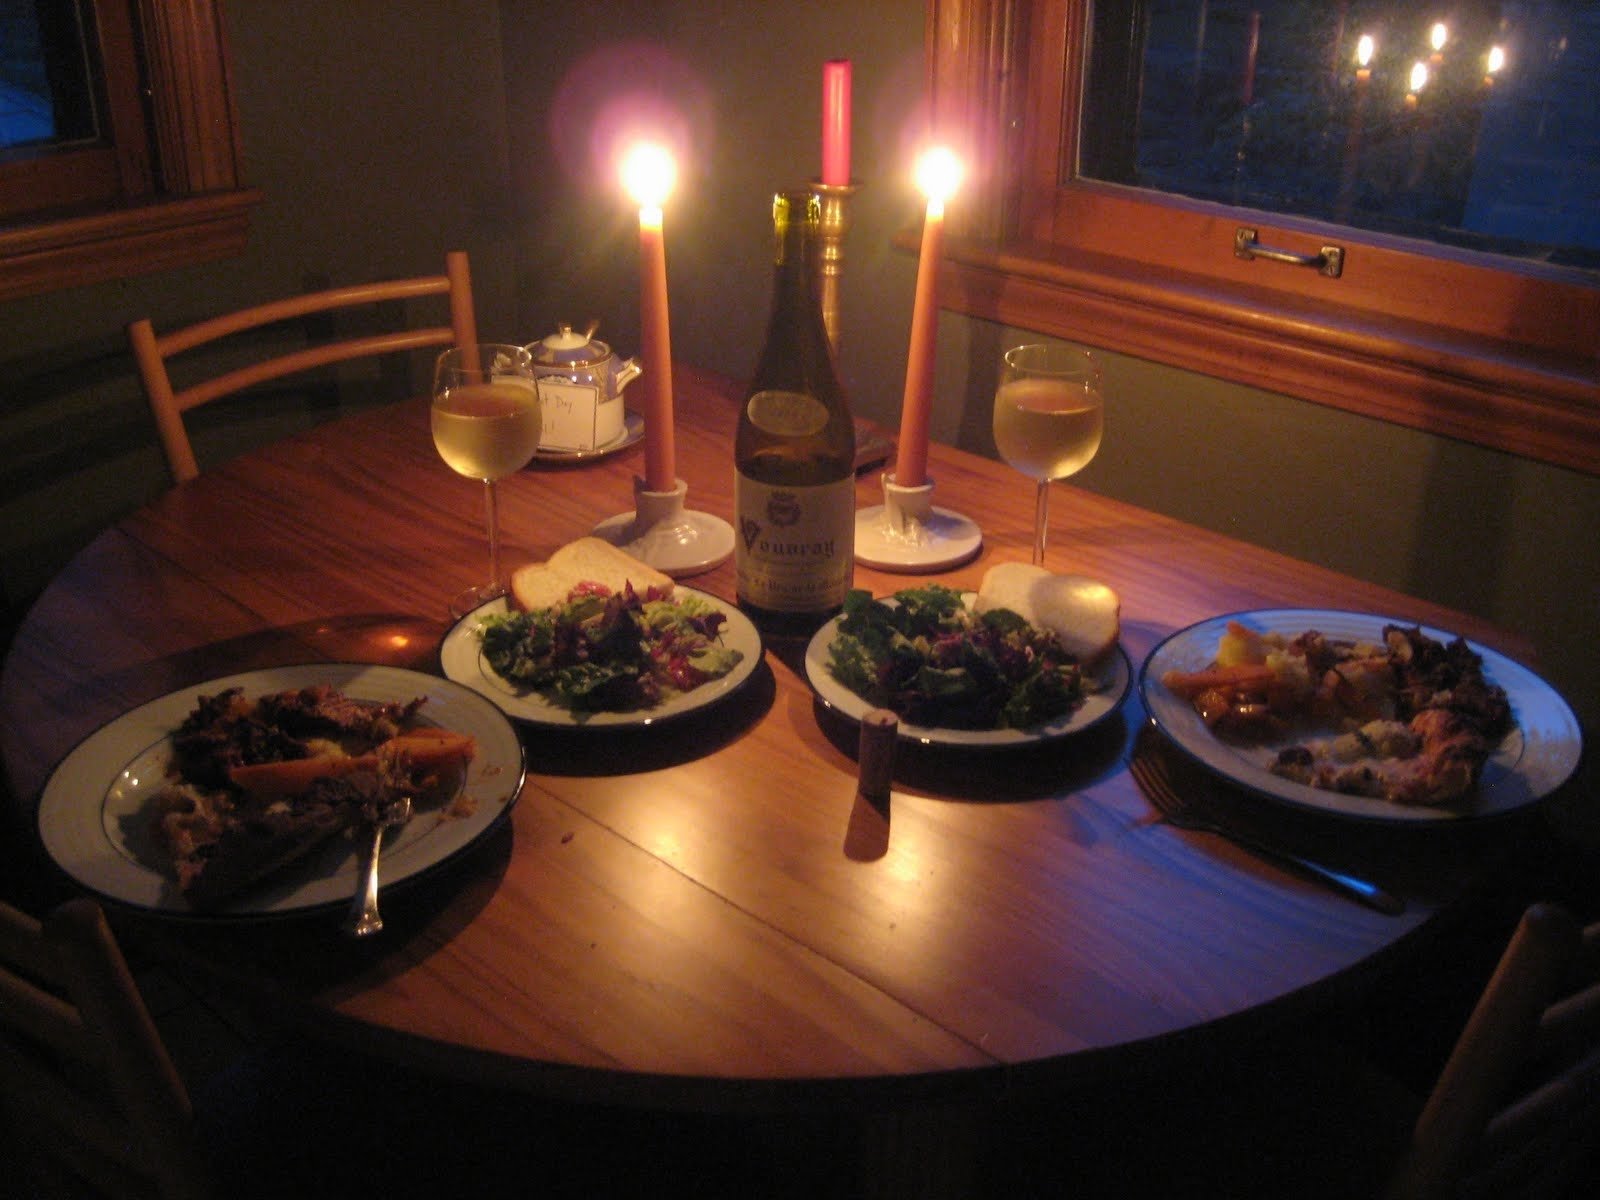 10 Elegant Romantic Dinner Ideas For Two At Home romantic dinner ideas for two at home design 29 mforum 2022